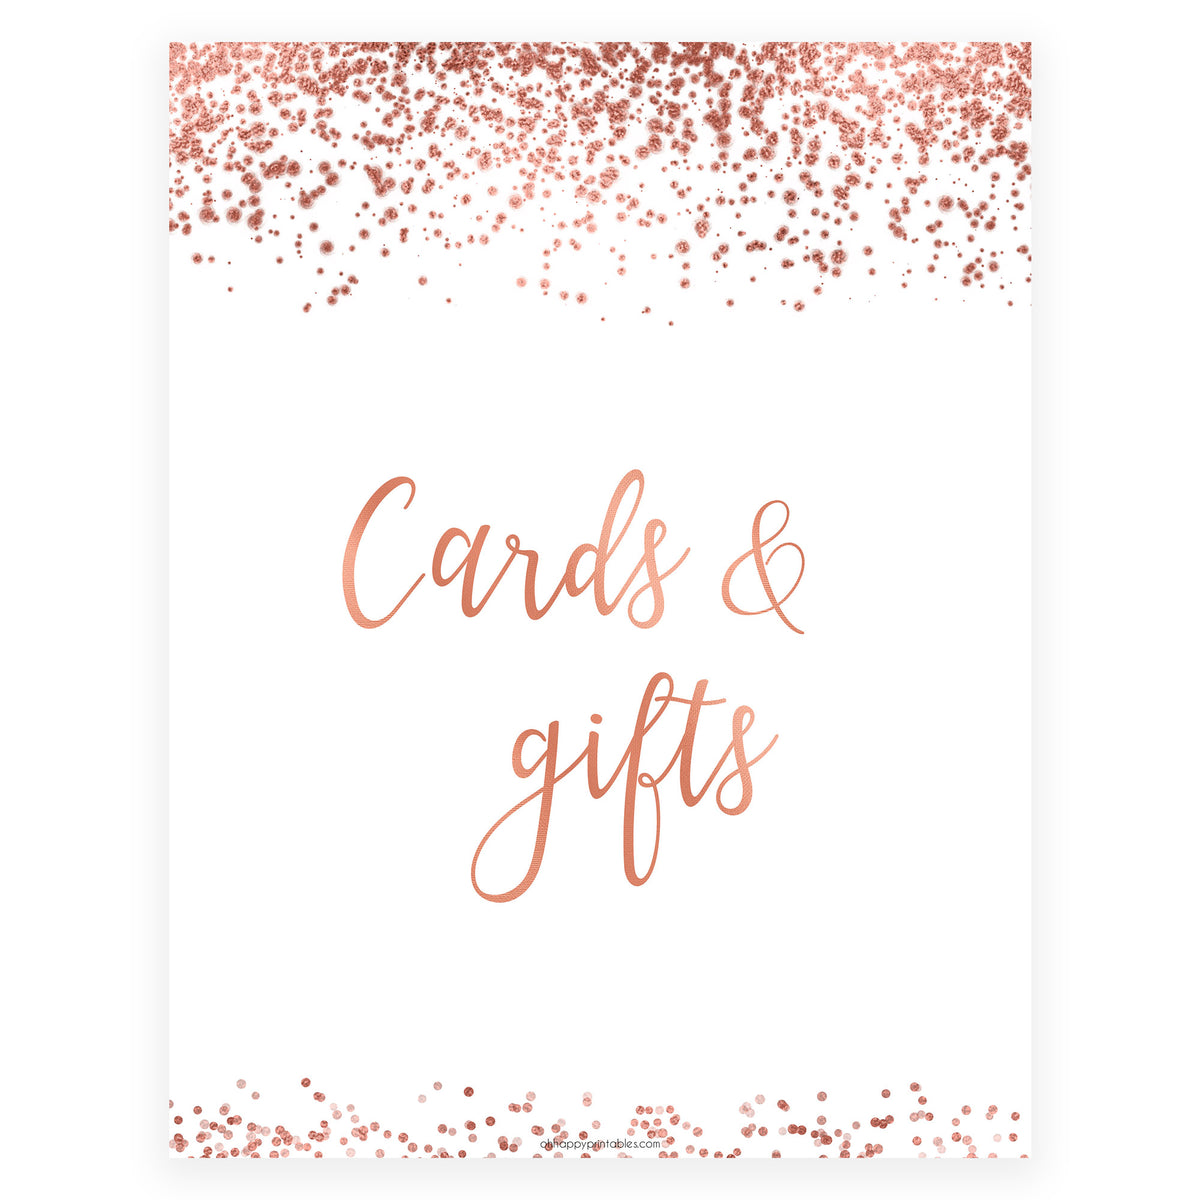 Cards & Gifts Sign - Rose Gold Foil